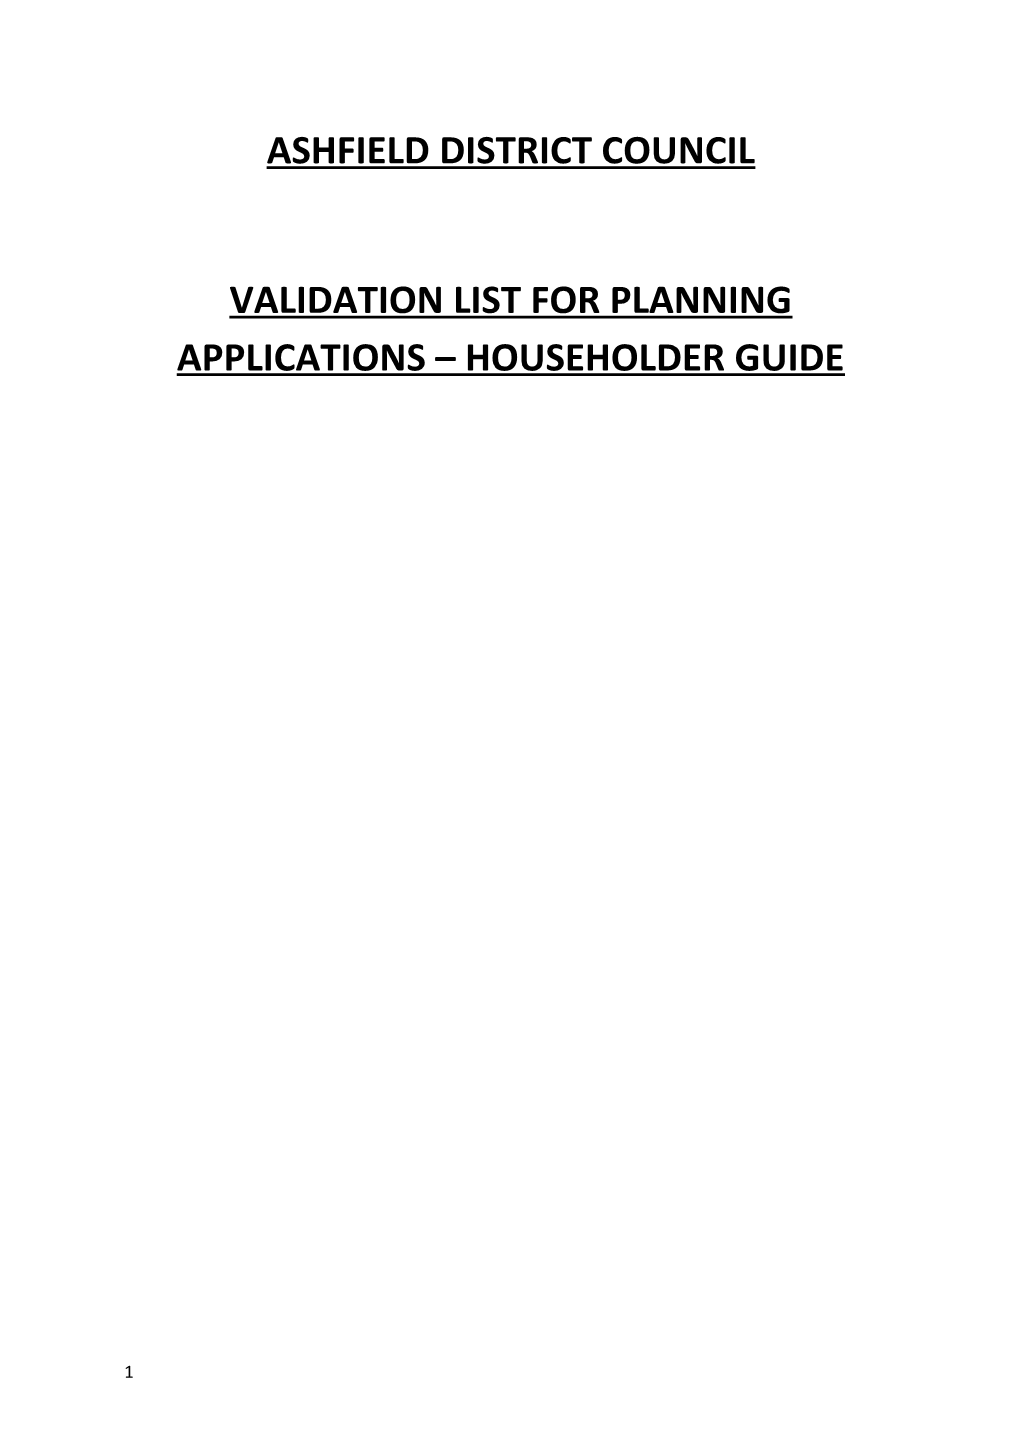 Validation List for Planning Applications Householder Guide